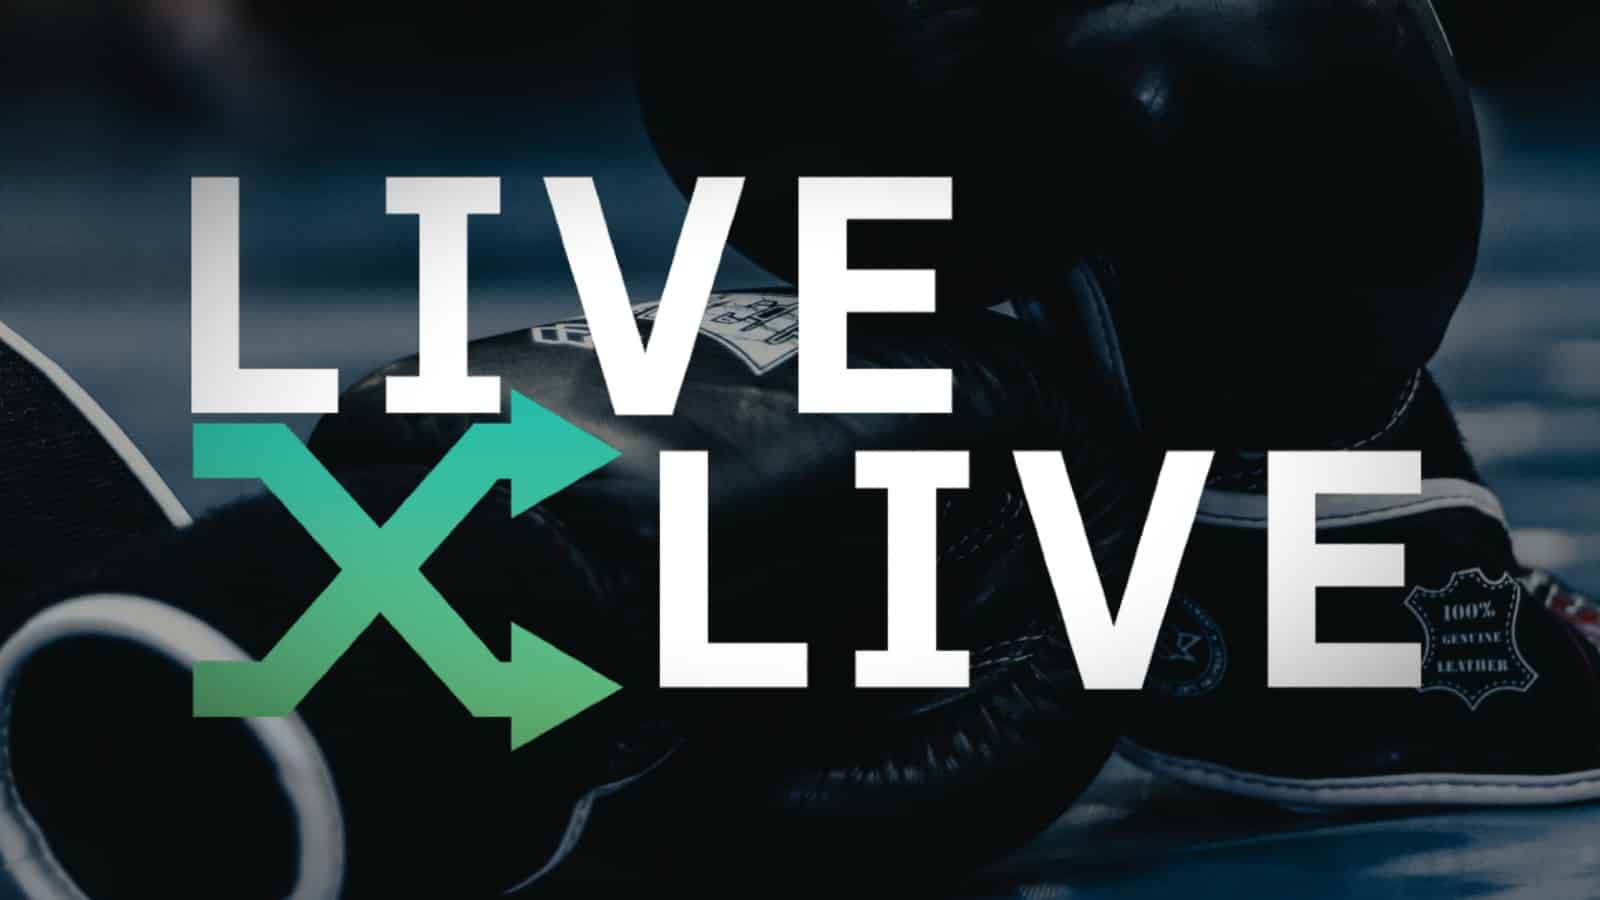 LiveXLive logo over image of boxing gloves